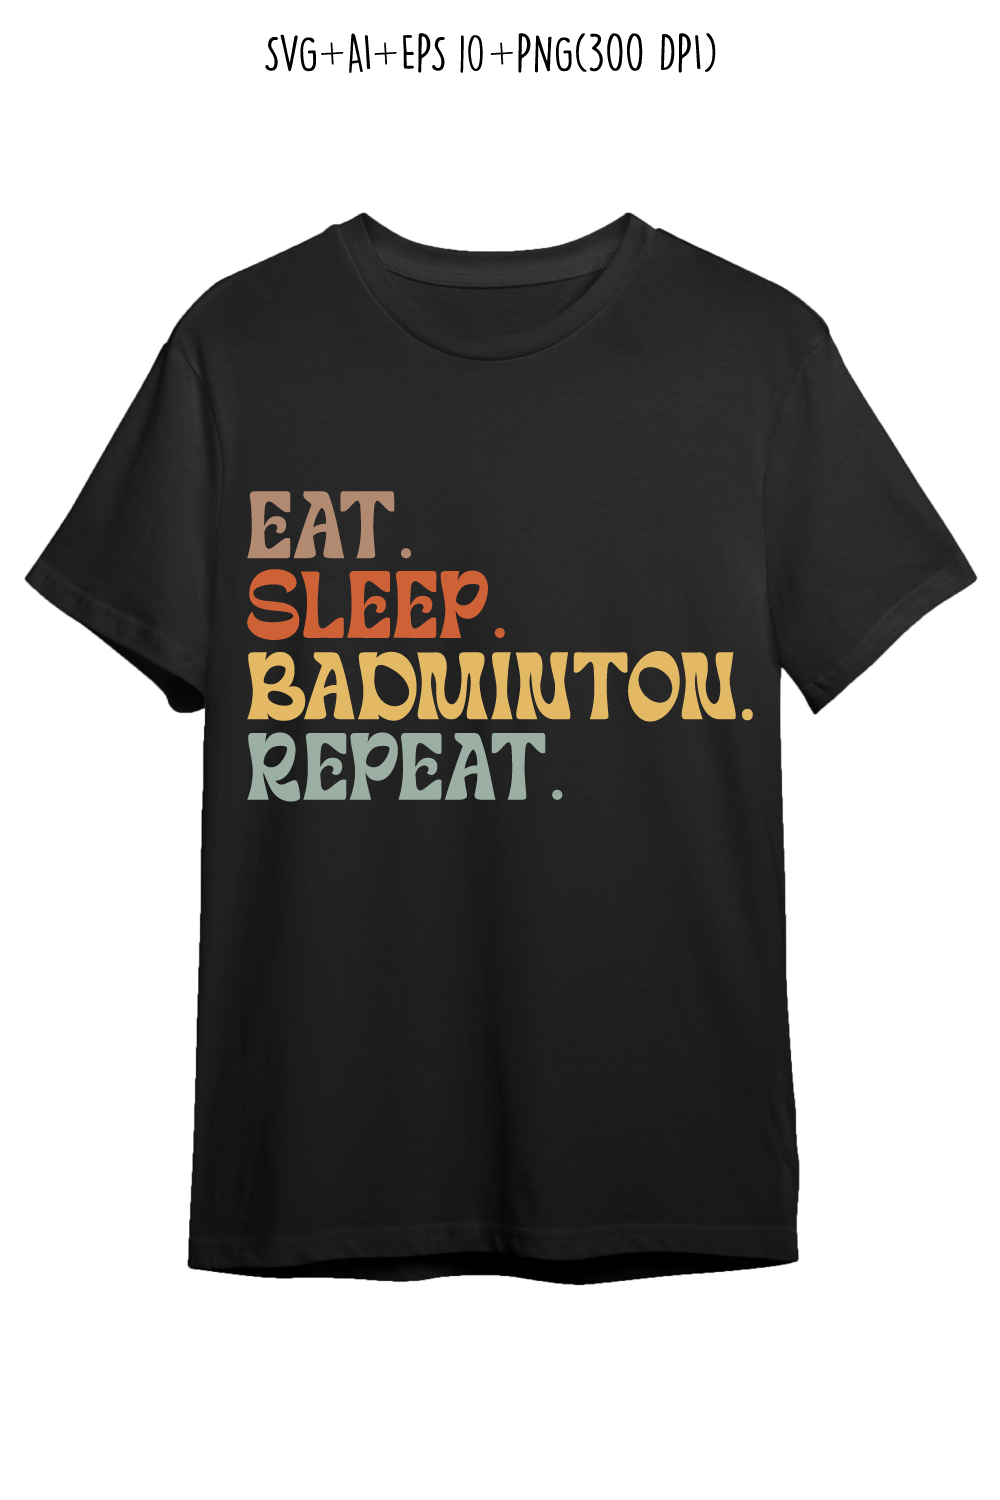 Calls to withdraw 'shameful' t-shirt bearing slogan 'Eat, Sleep